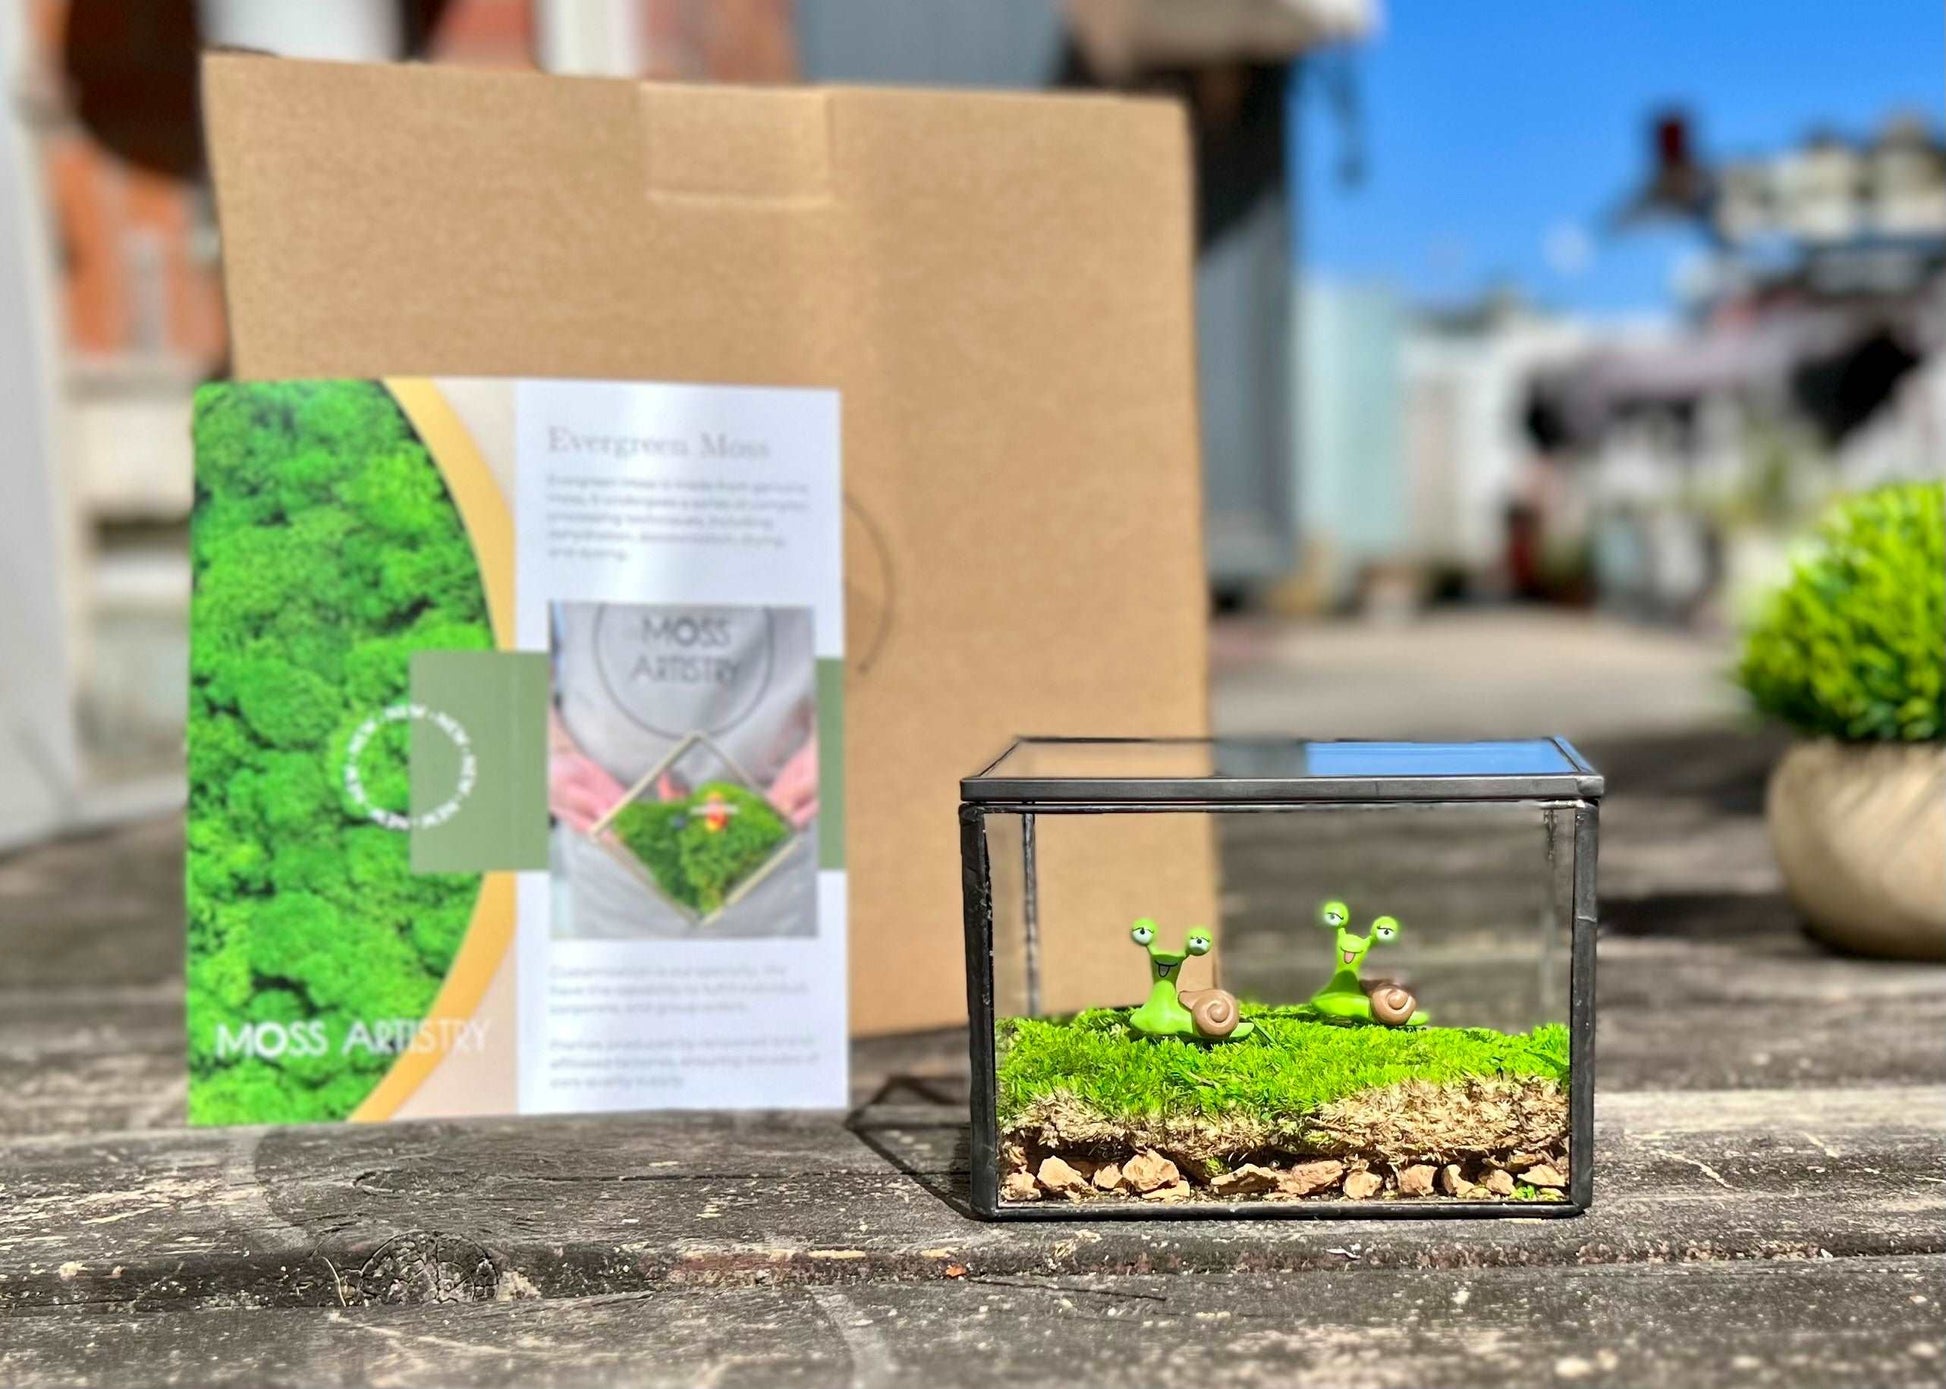 Smile Snail Desktop Decoration Micro Landscape Lawn Handmade Preserved Moss Art